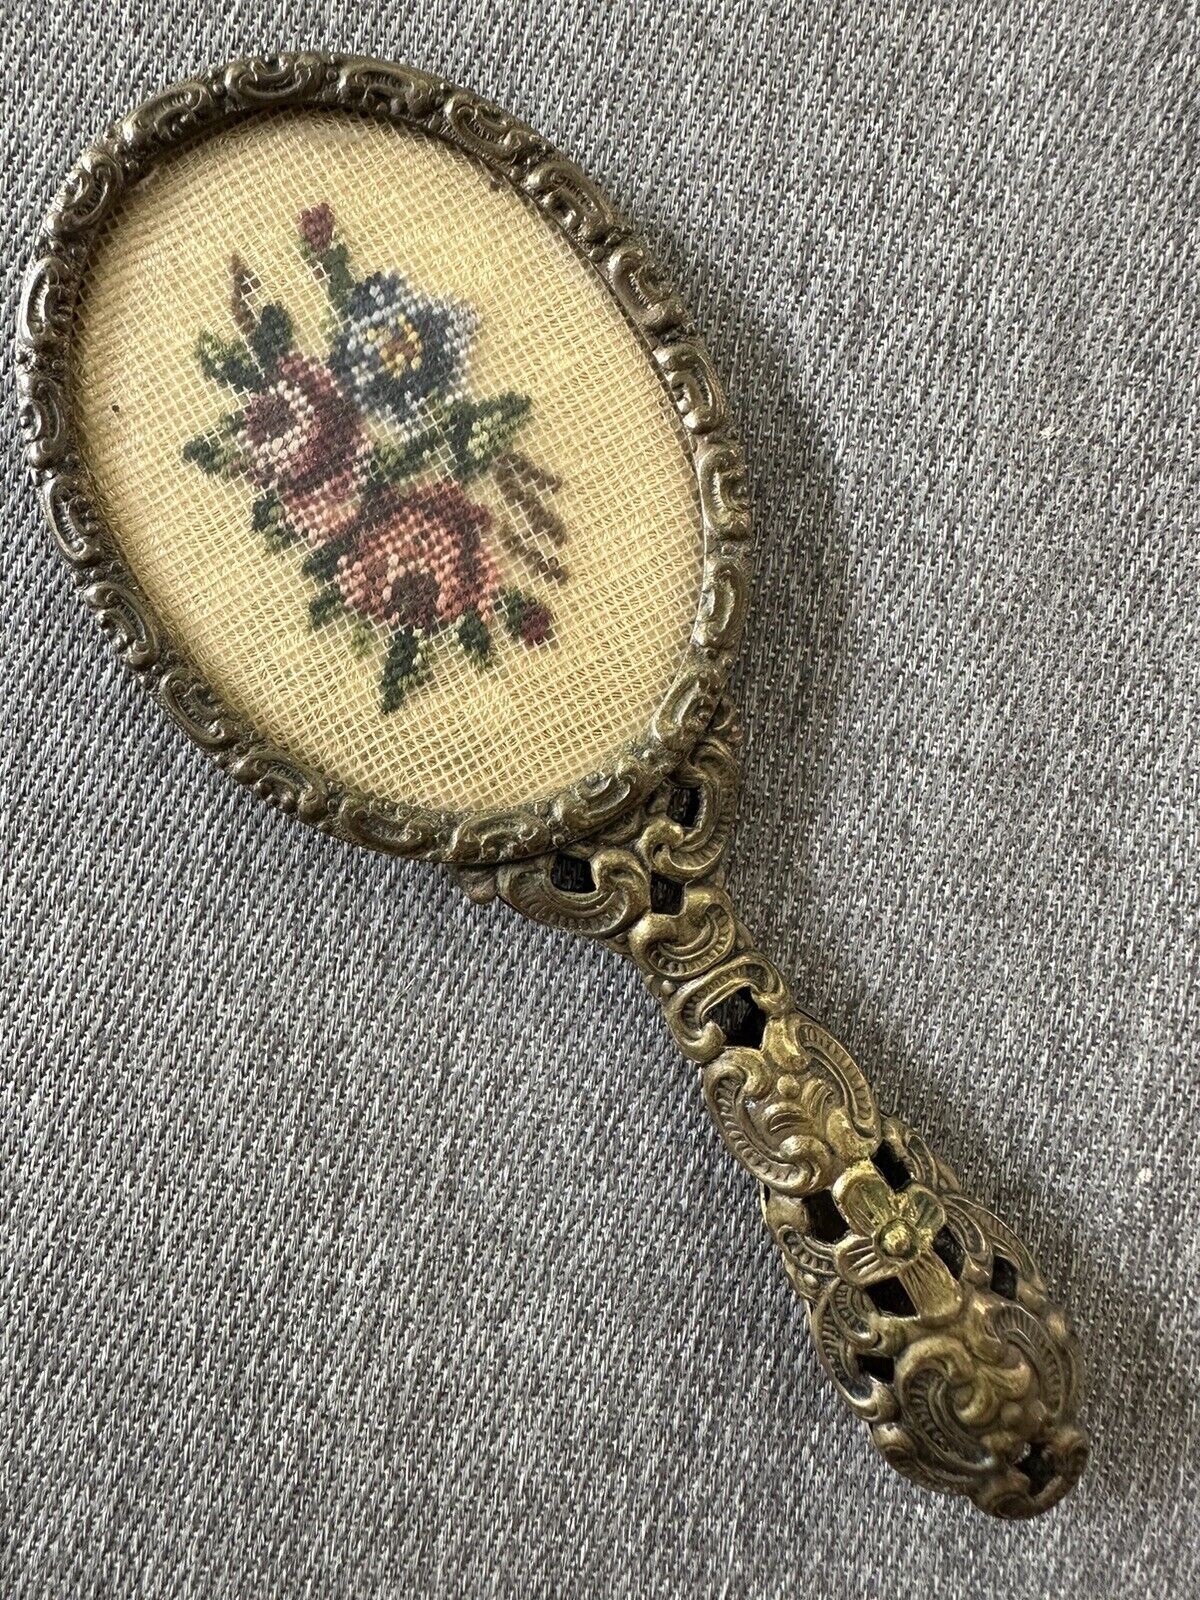 Antique Gold Filigree Cross Stitch Purse Hand Mirror Powder Sifter Compact